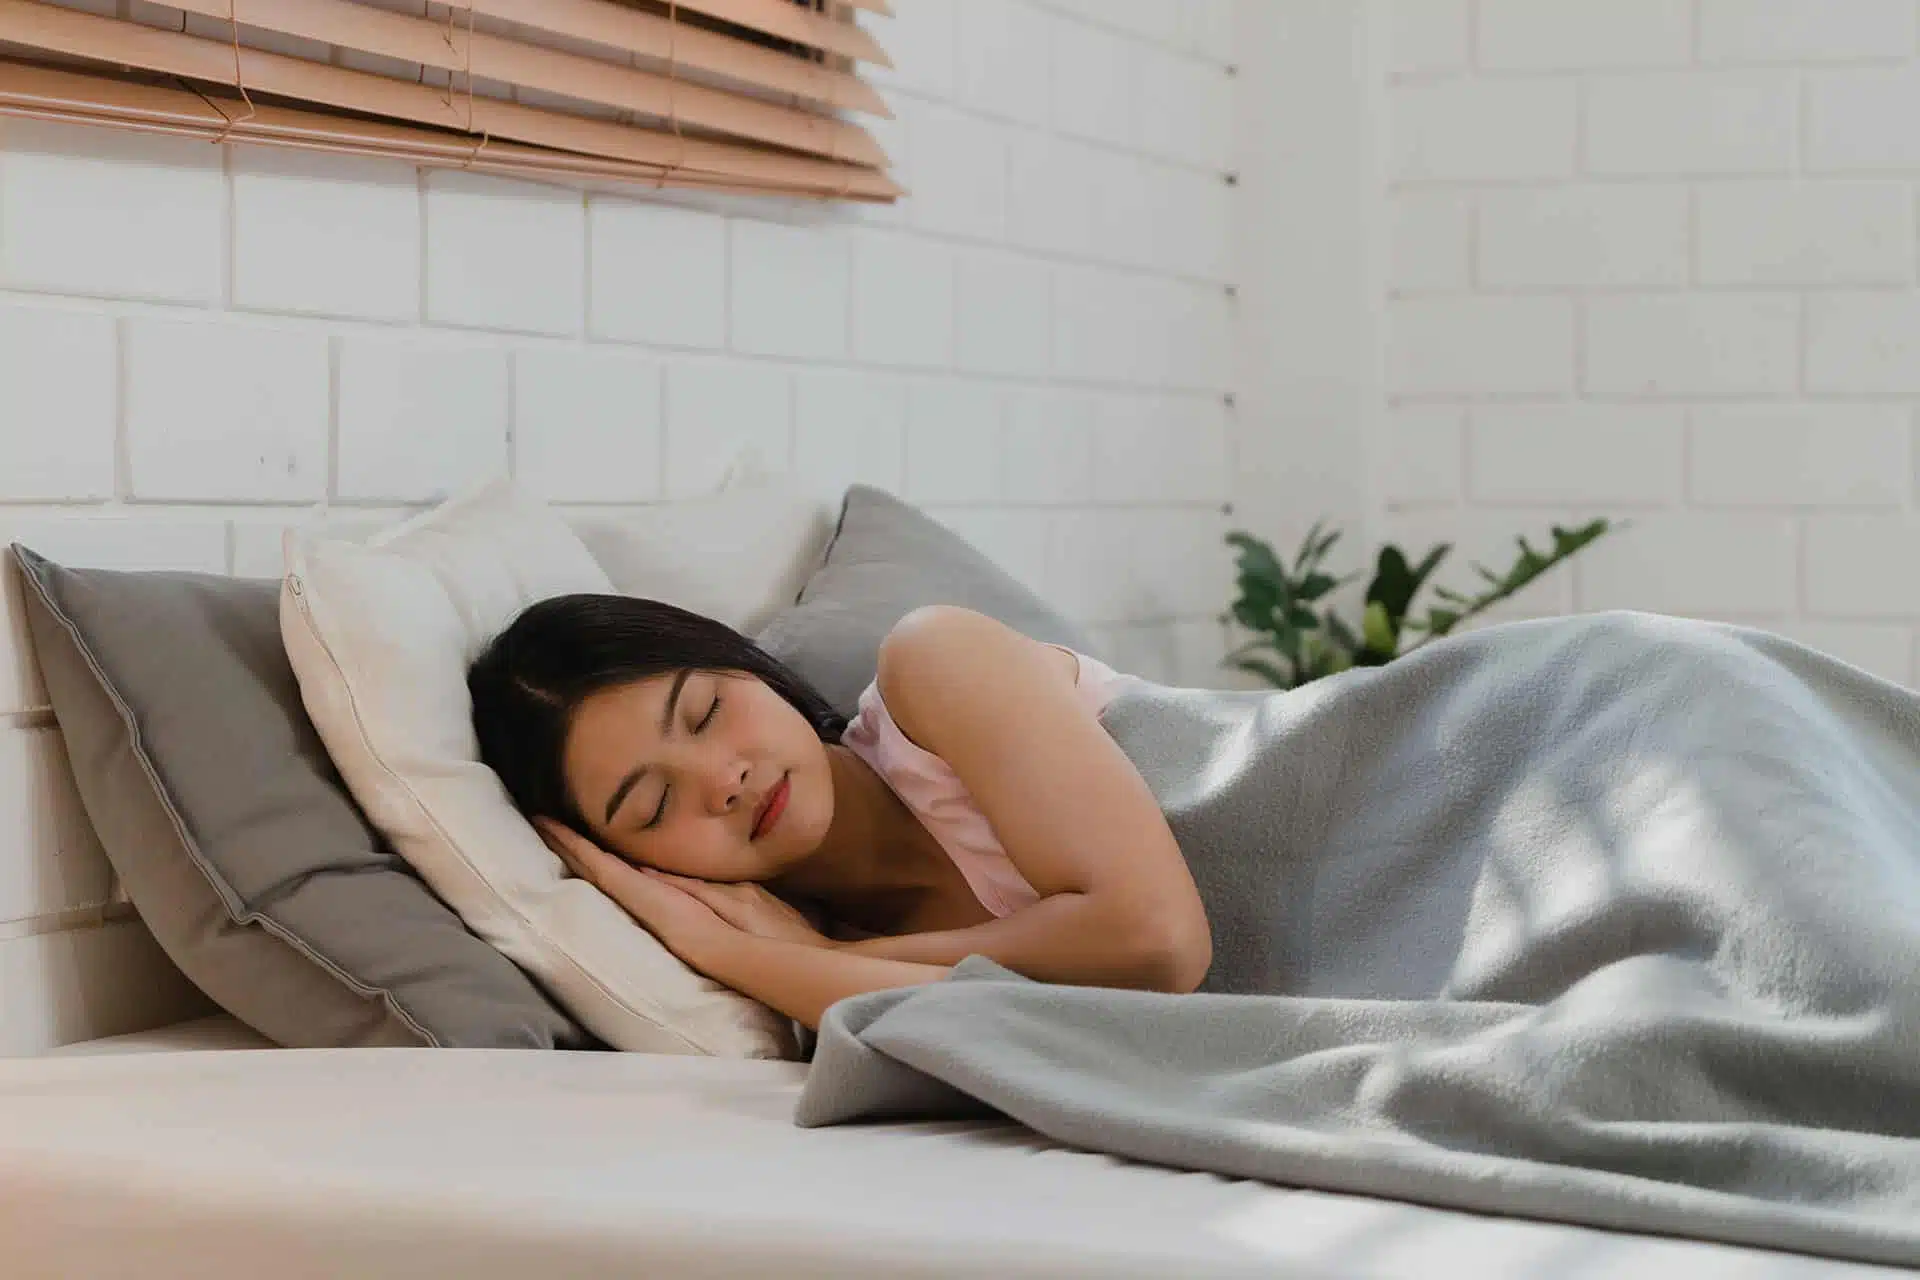 The five ways that should improve your healthy sleep habit